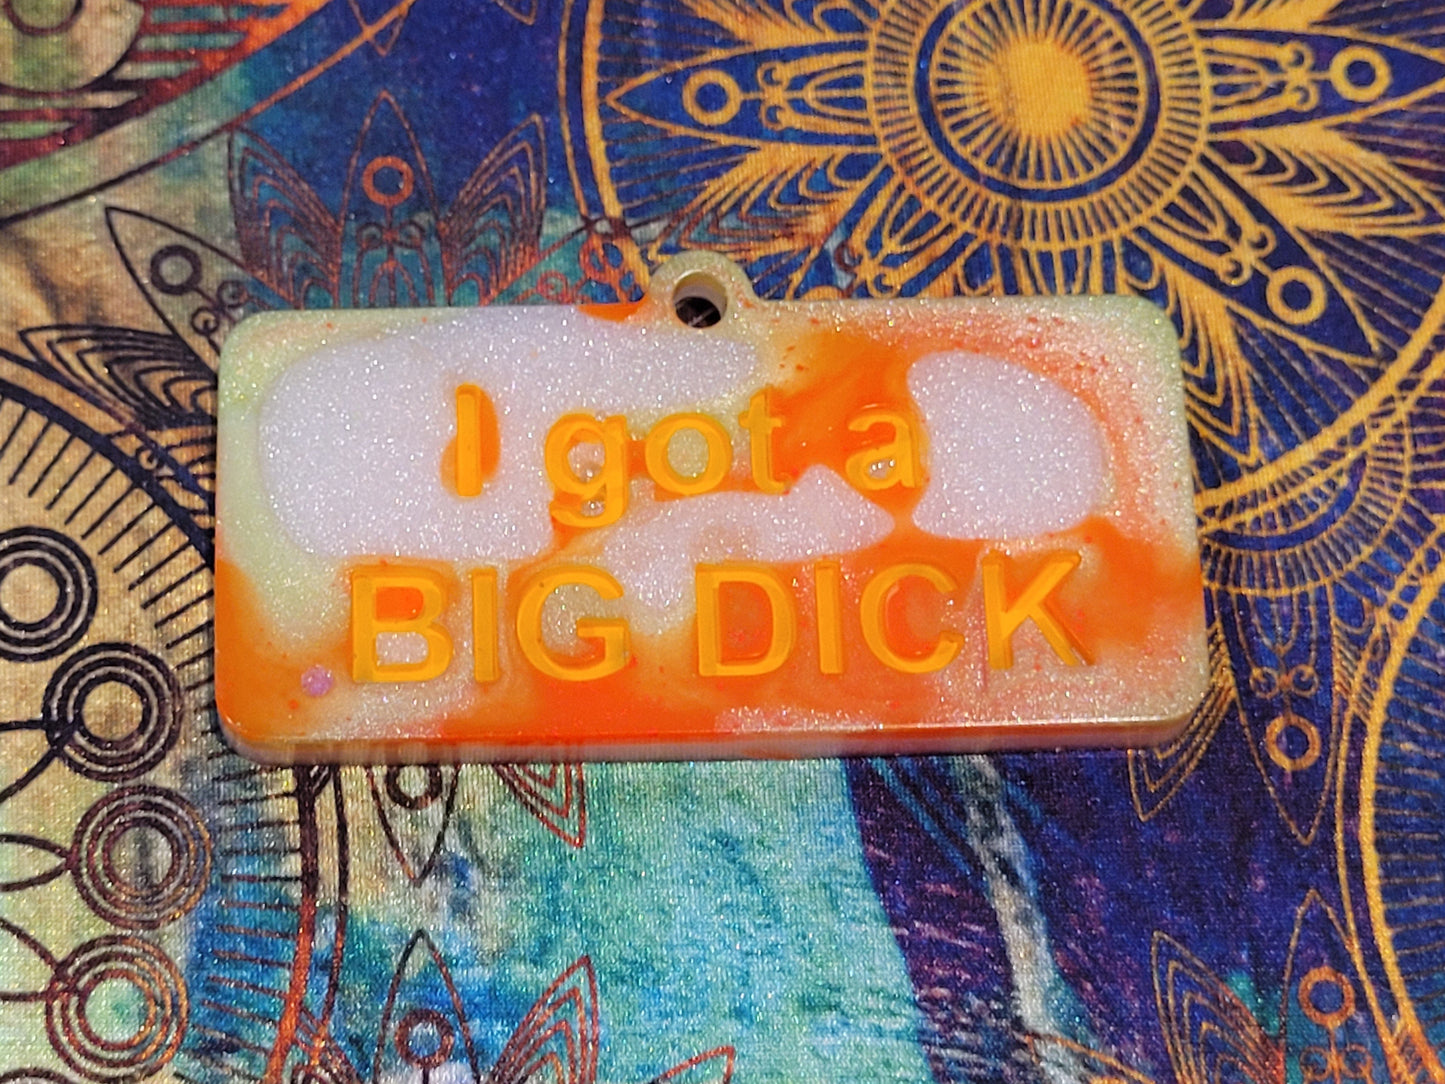 Big Dick Keychain Attitude Keychain - Tag